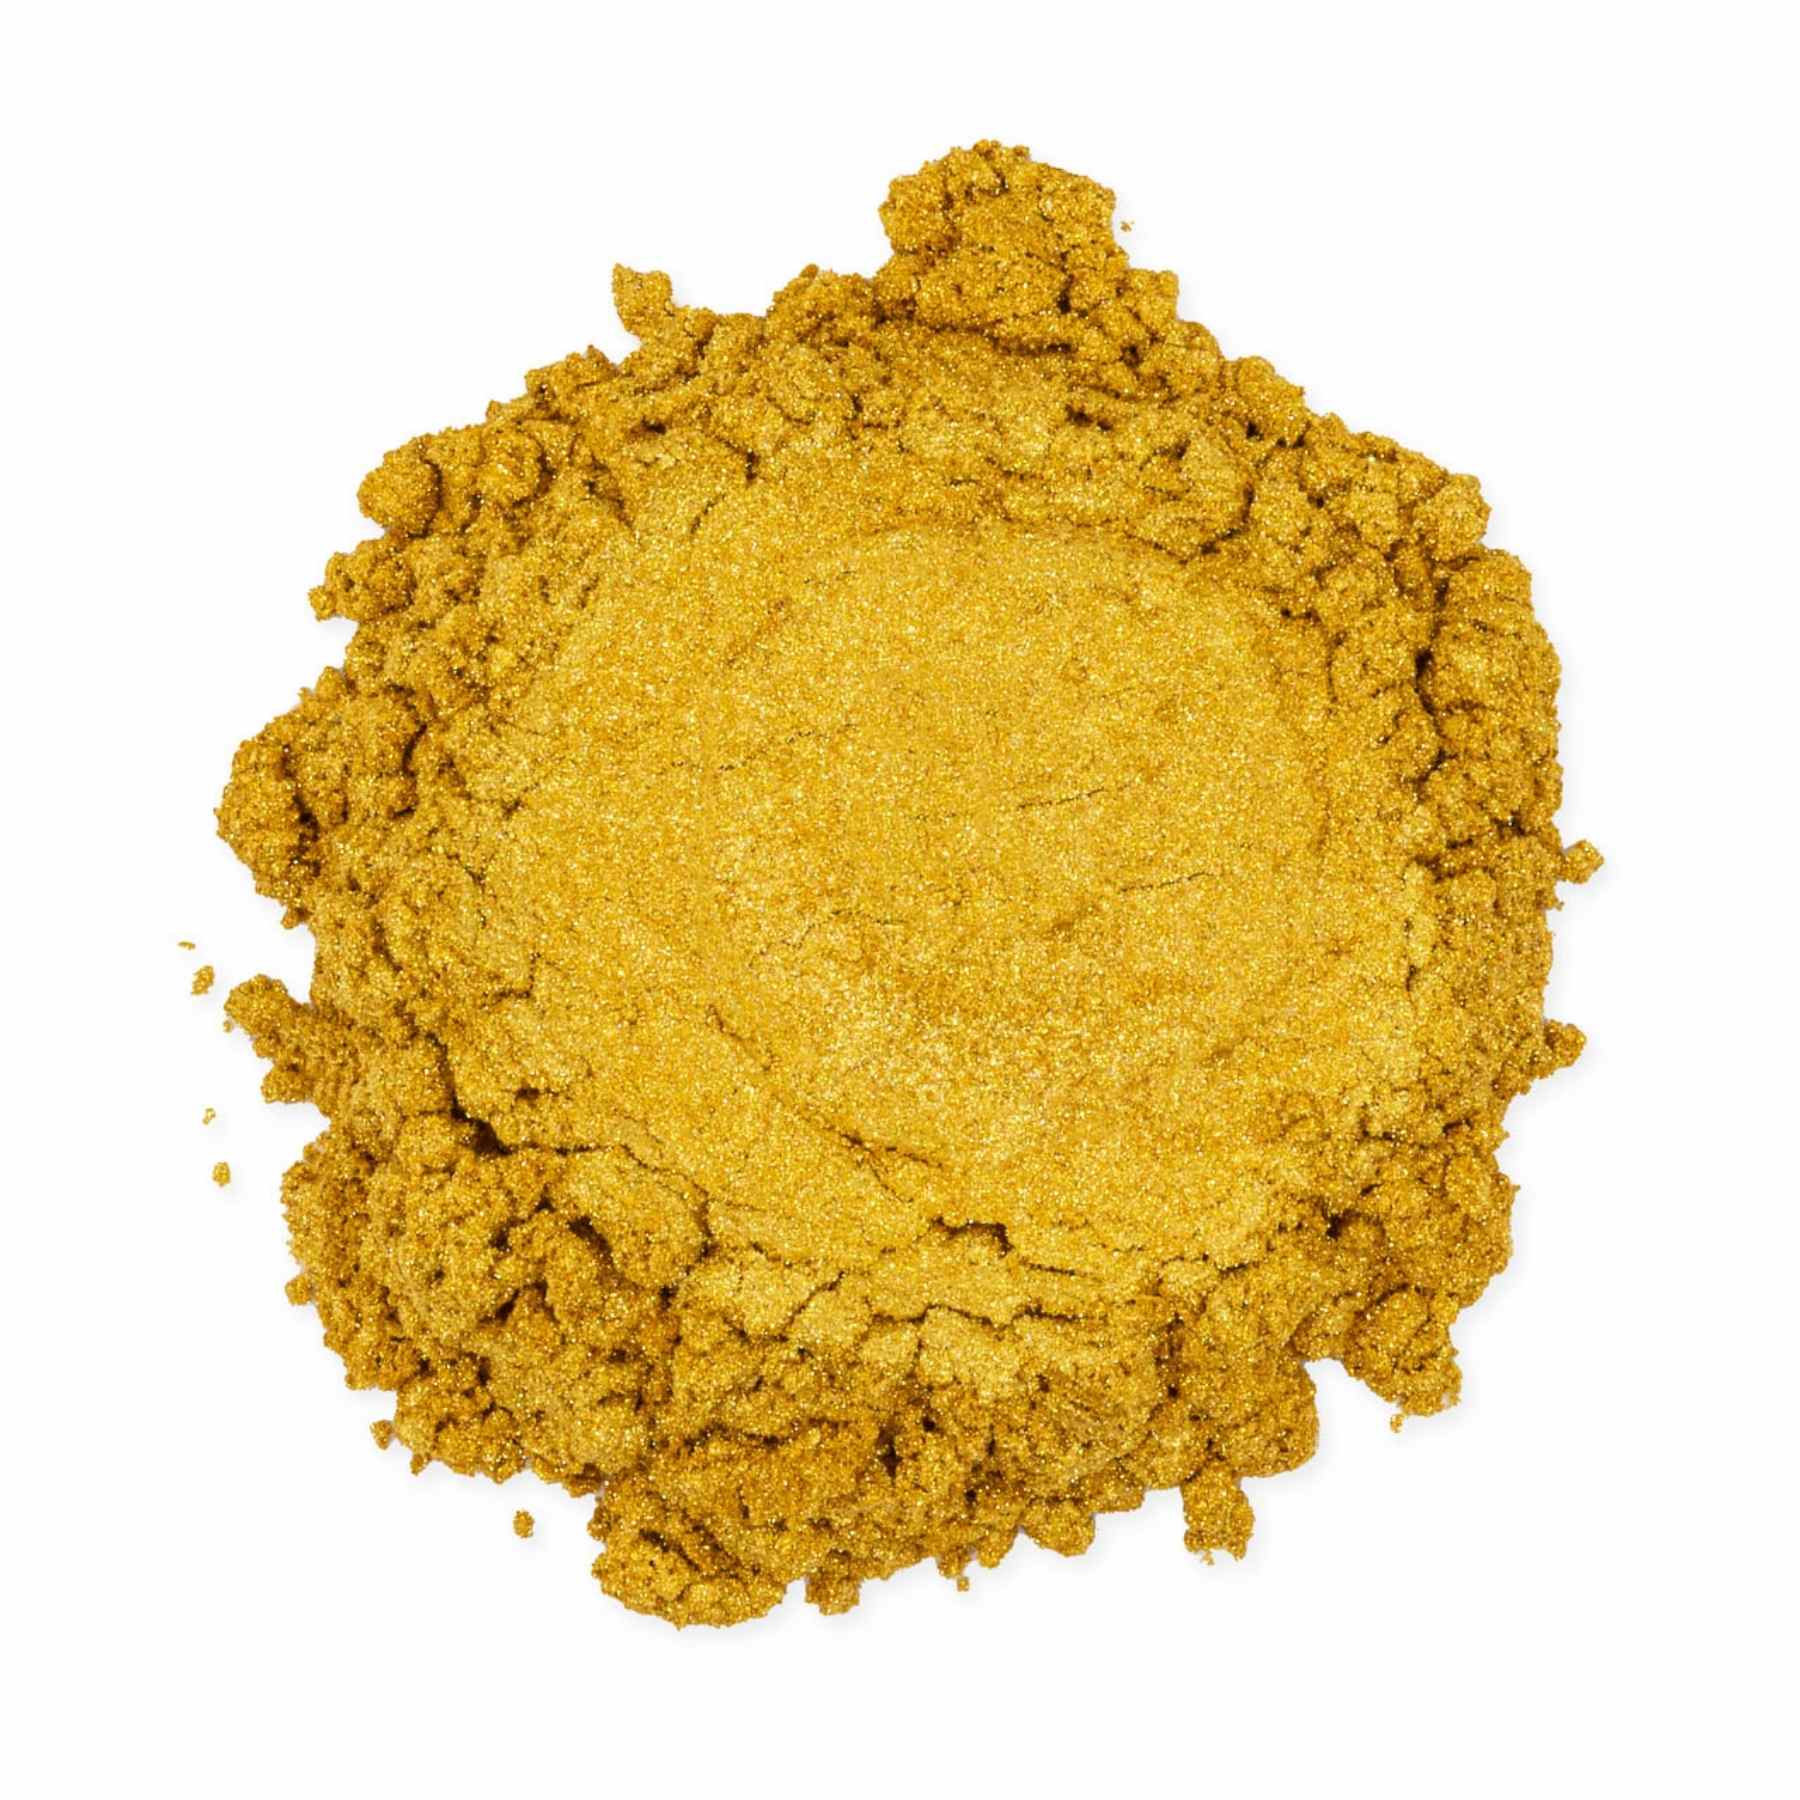 Edible Gold dust, Culinary Food grade gold Powder